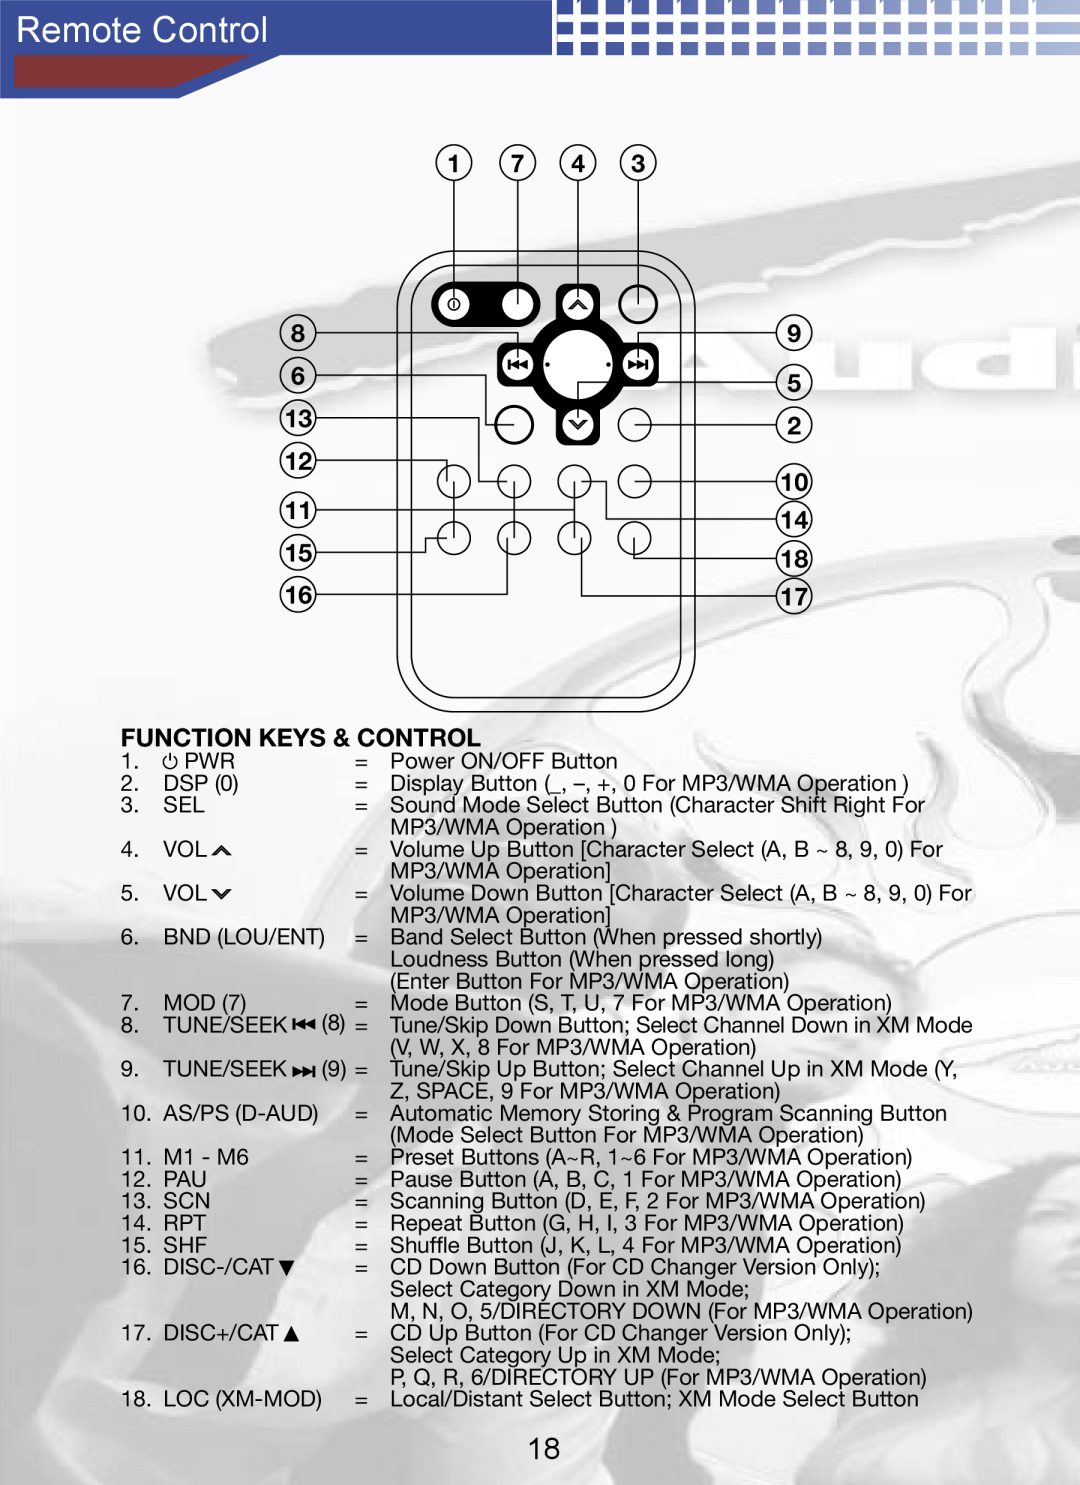 AudioBahn A1150N manual Remote Control 